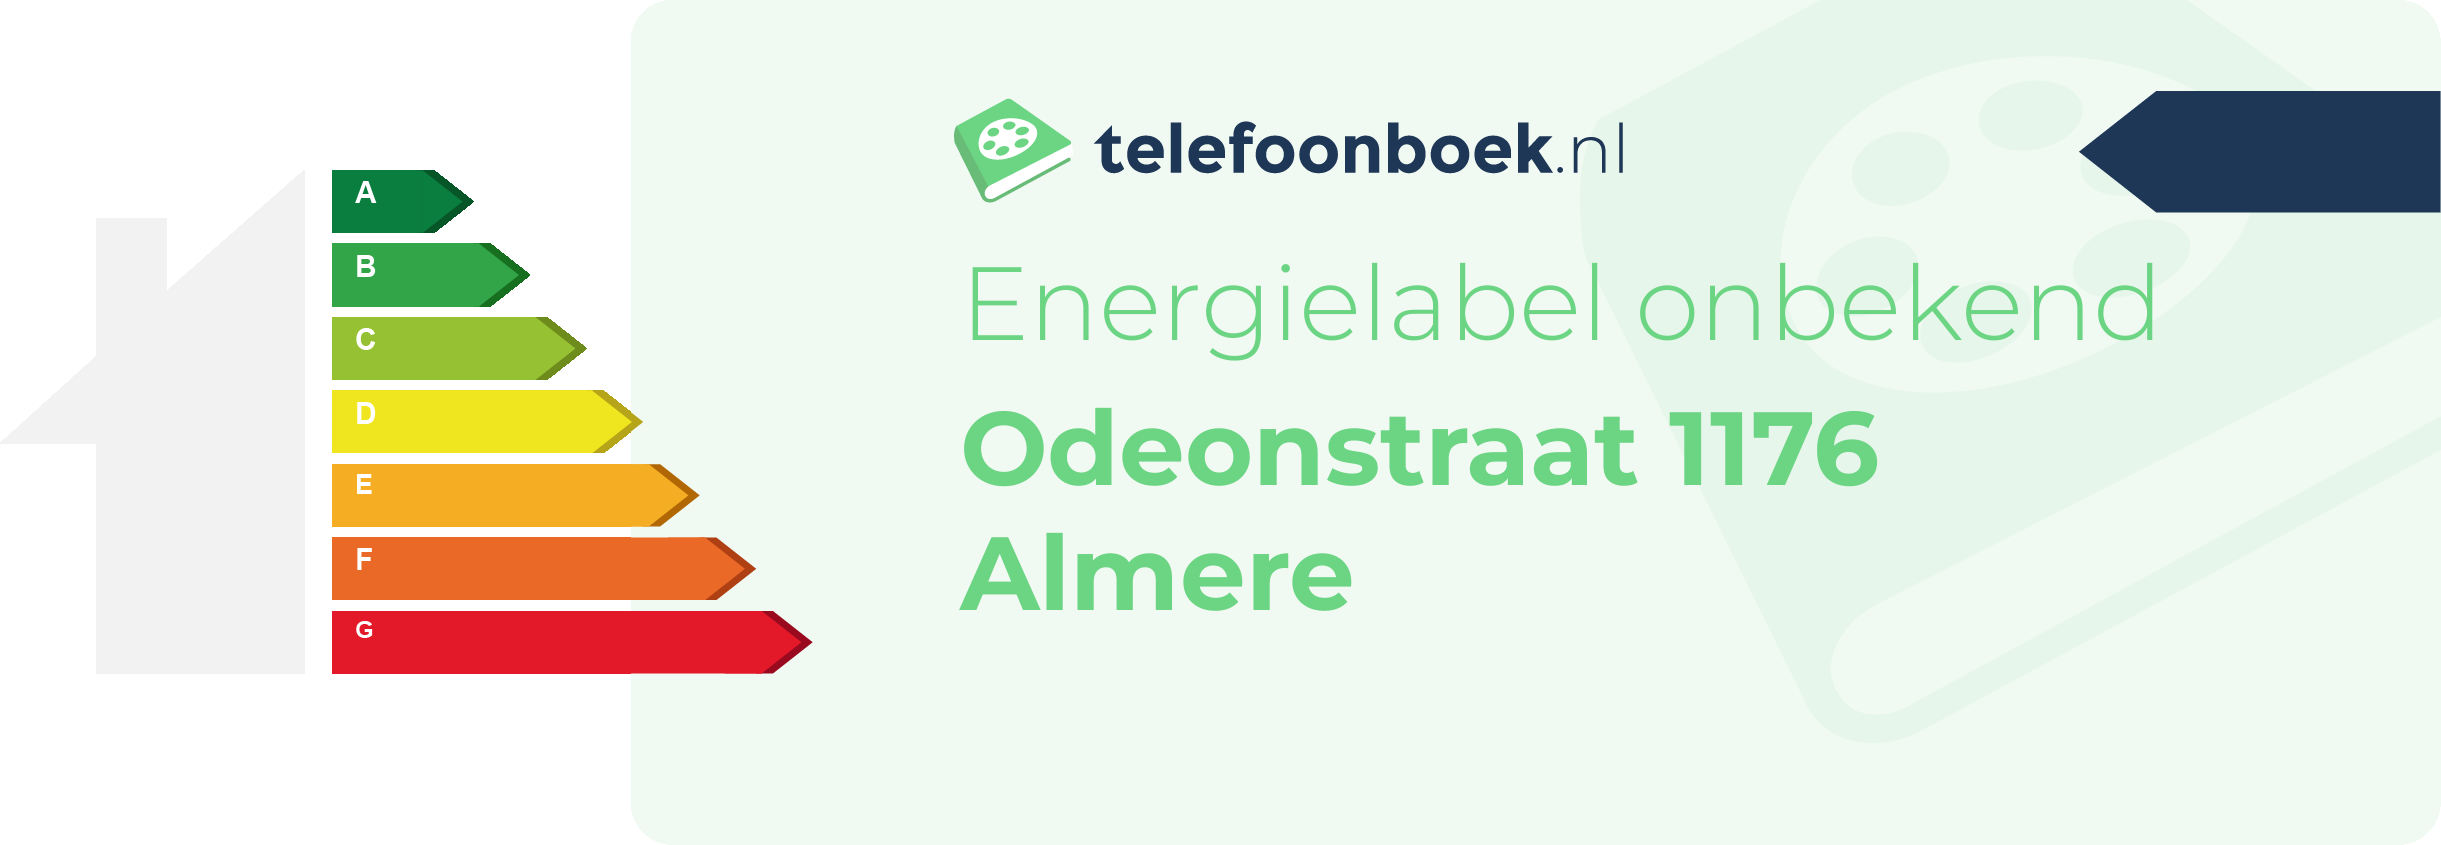 Energielabel Odeonstraat 1176 Almere